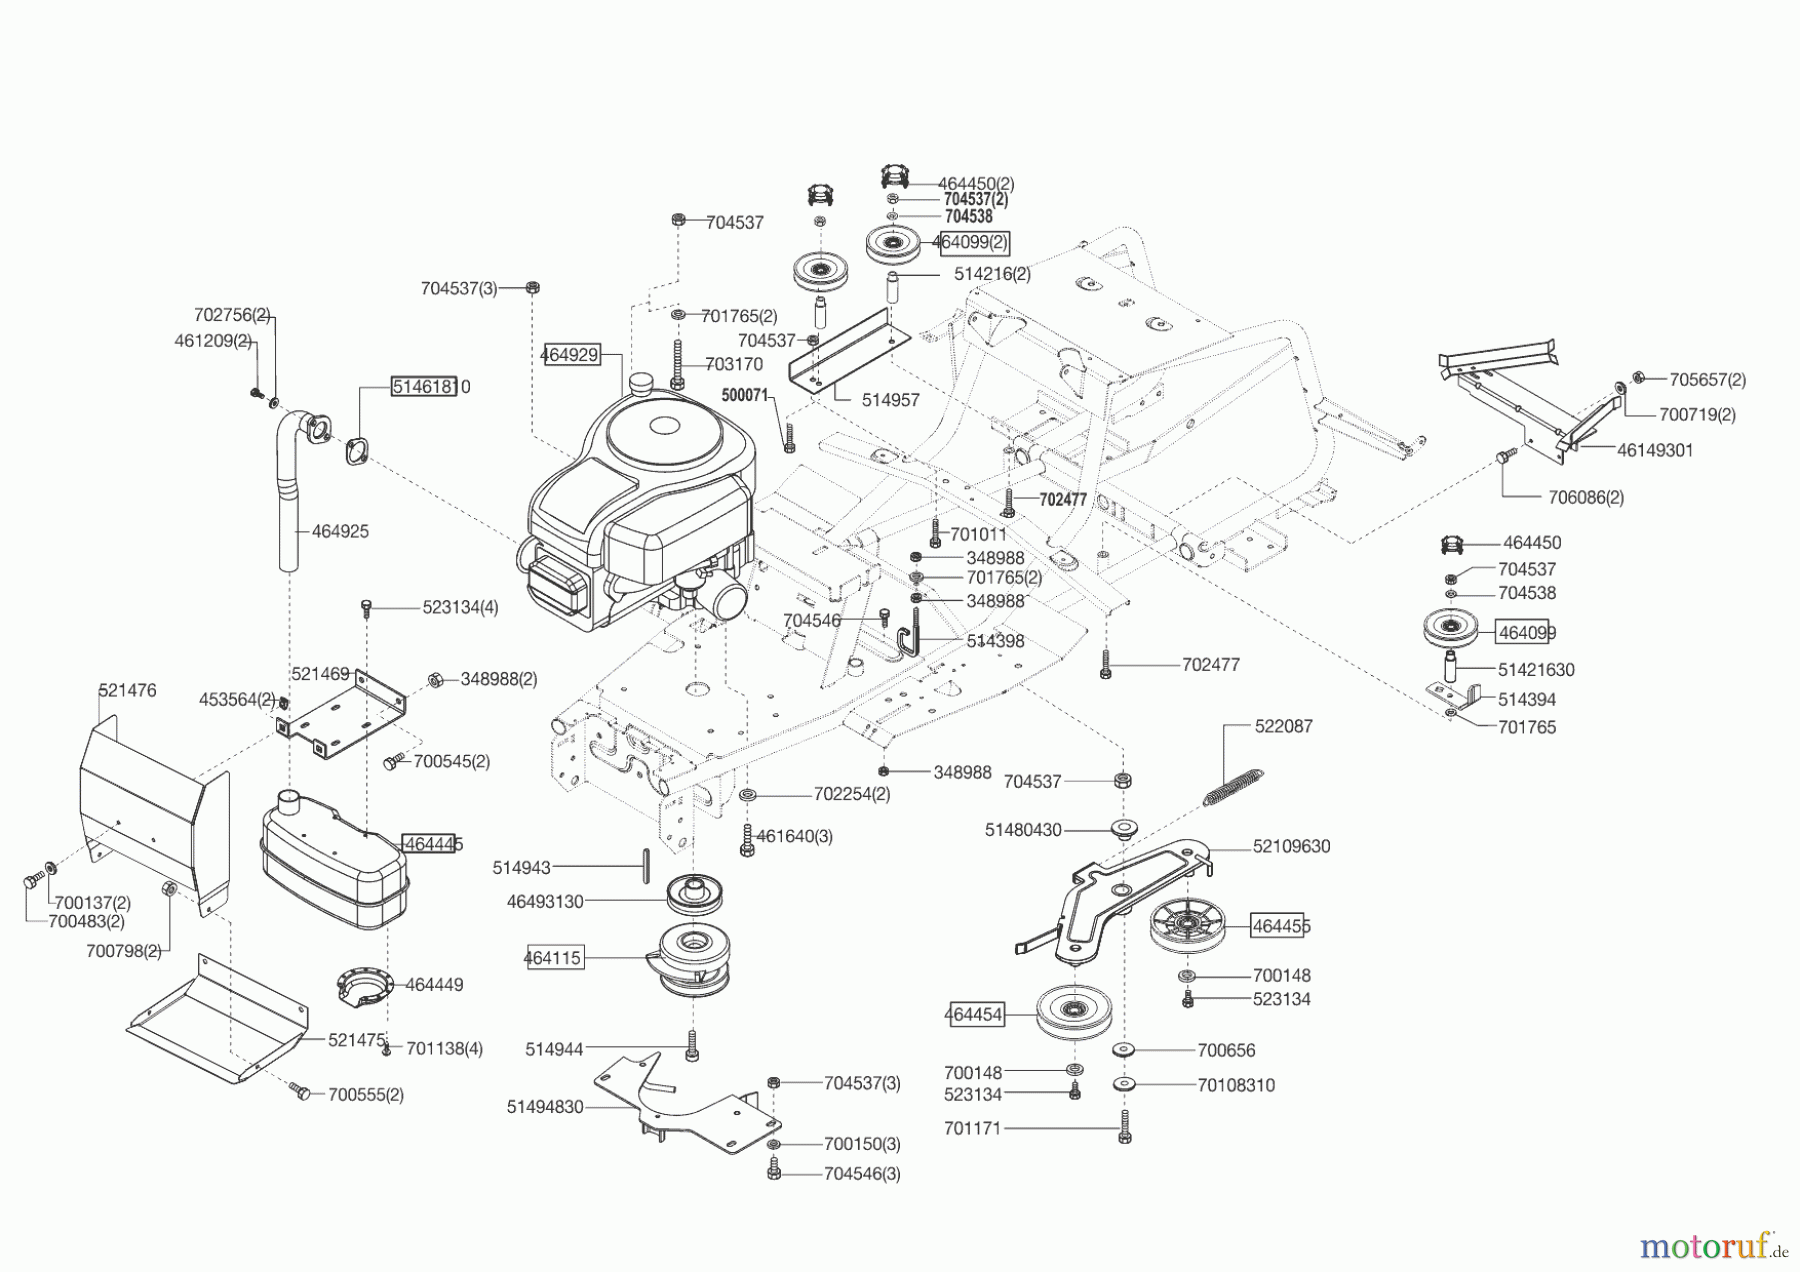  AL-KO Gartentechnik Rasentraktor Comfort T 954 HD-A  ab 03/2015 Seite 4